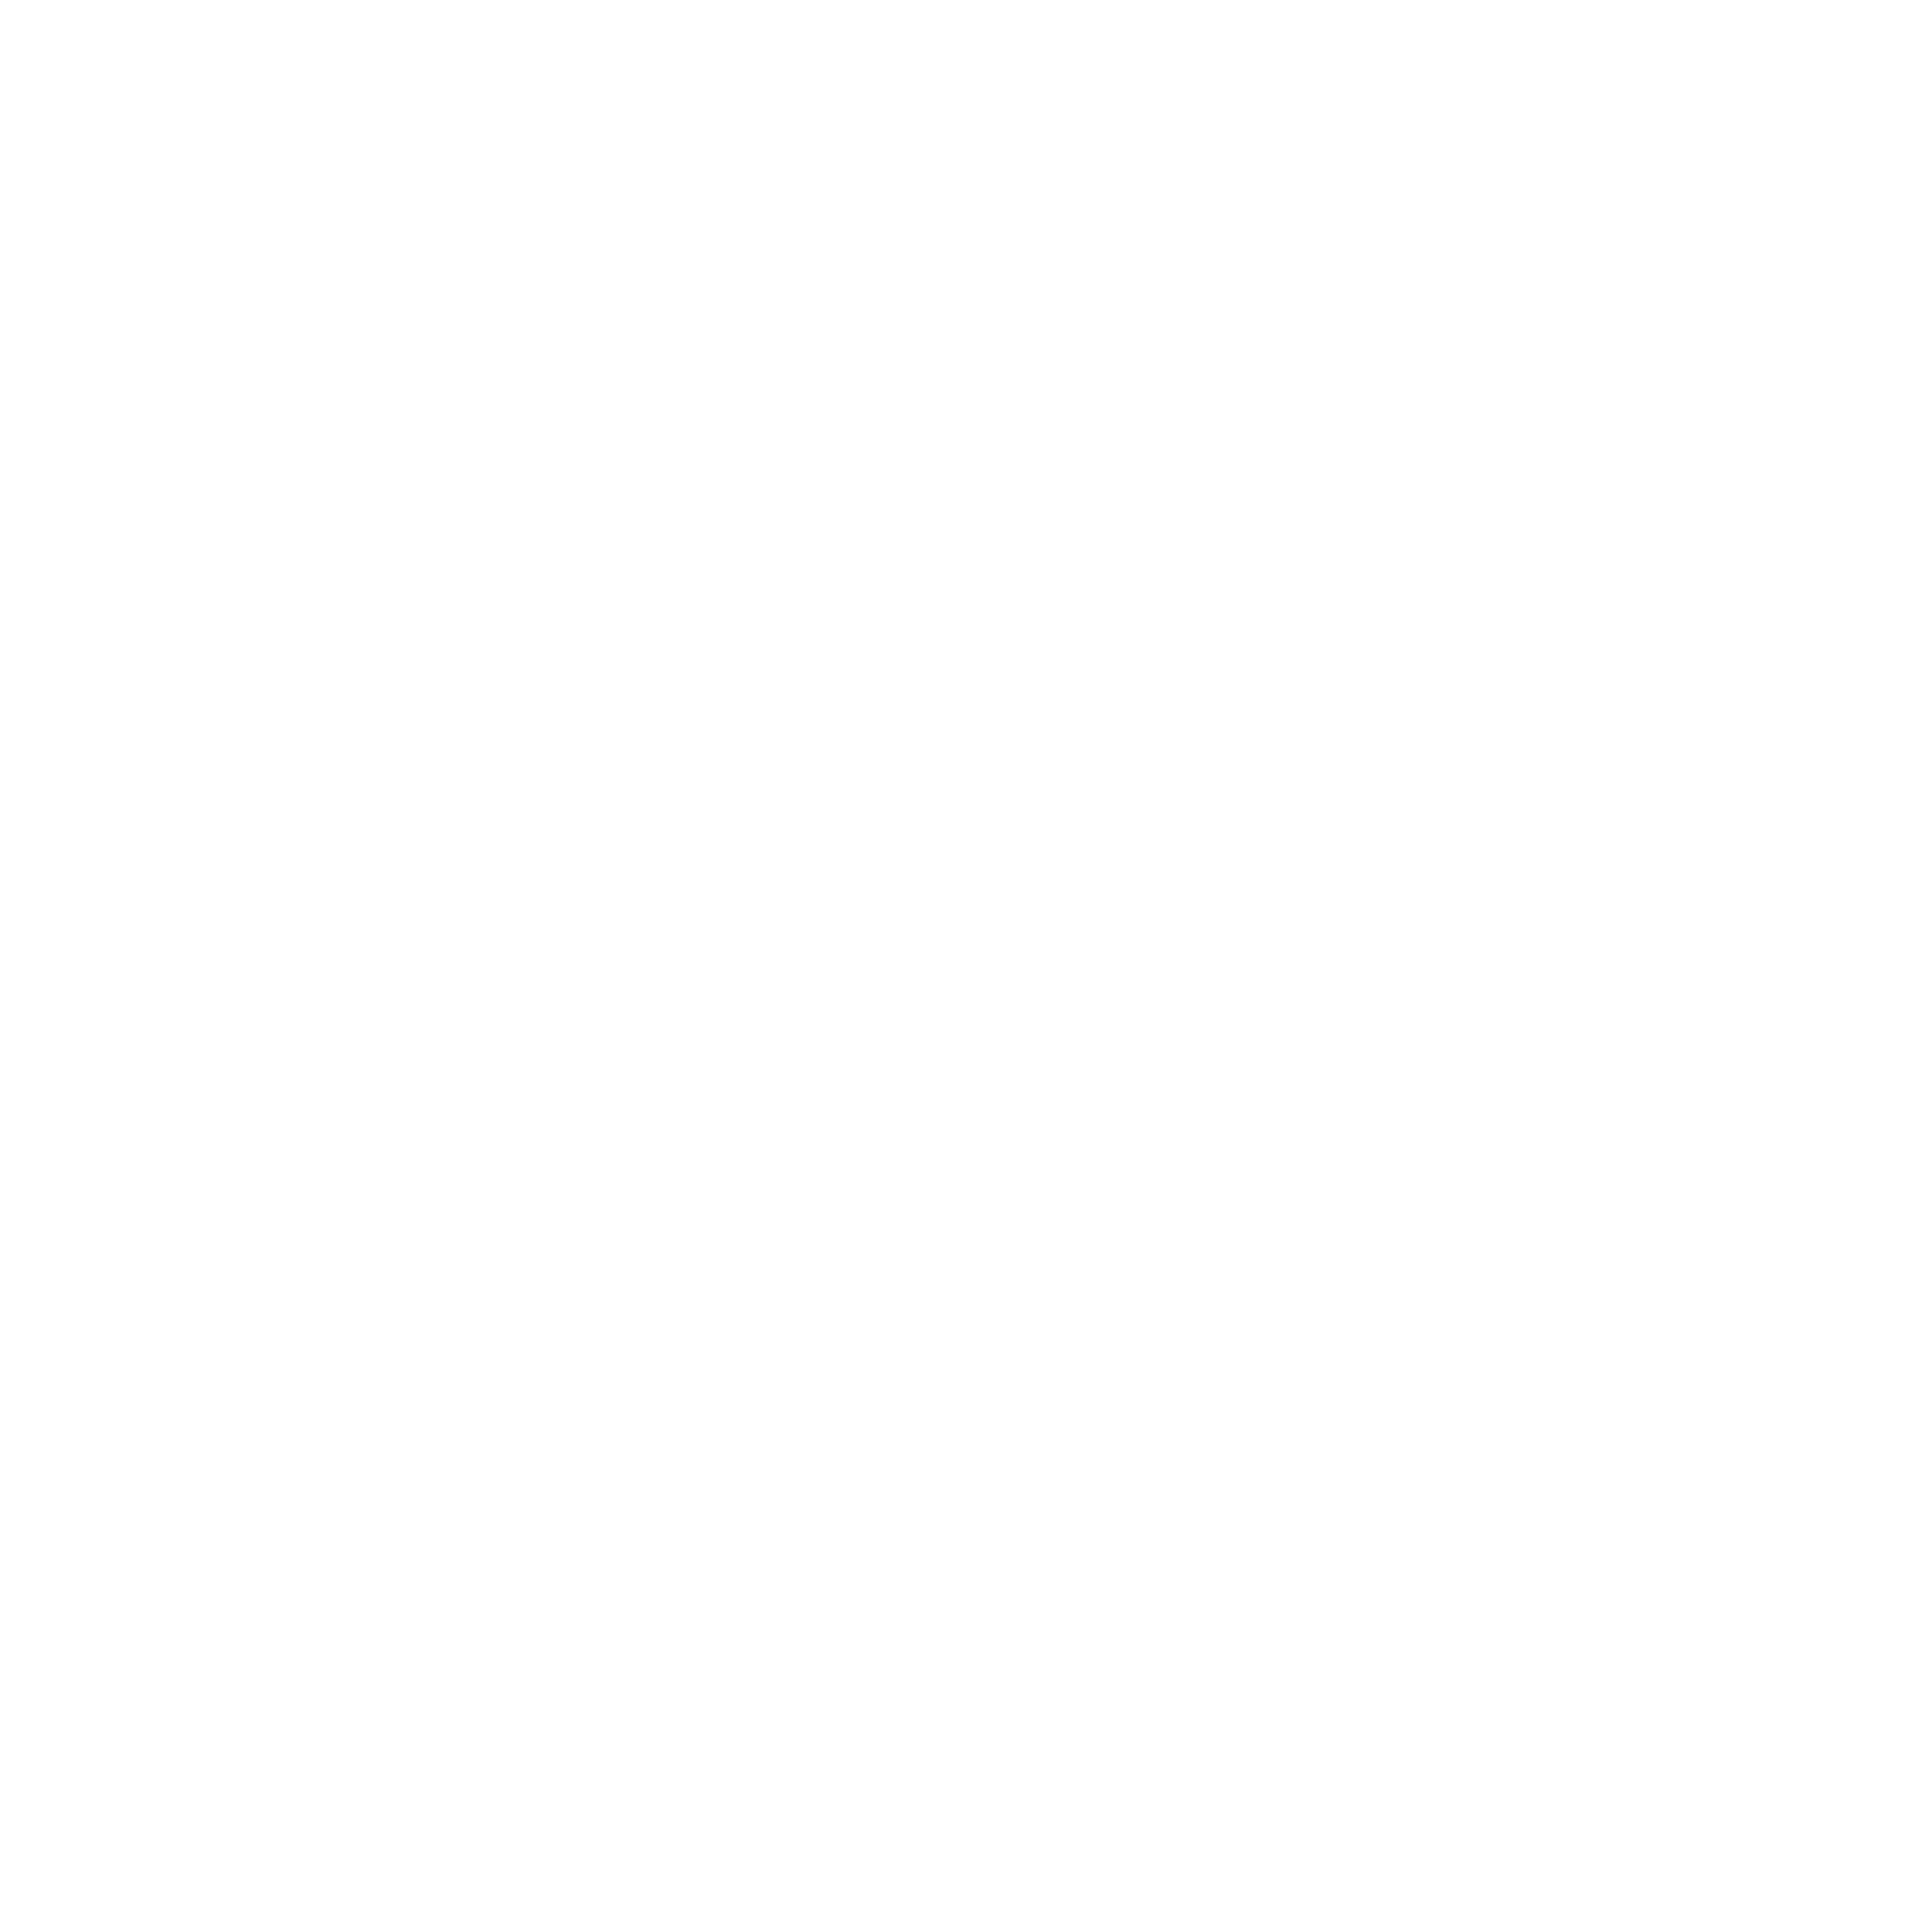 Lob Logo - LOB Logo PNG Transparent & SVG Vector - Freebie Supply